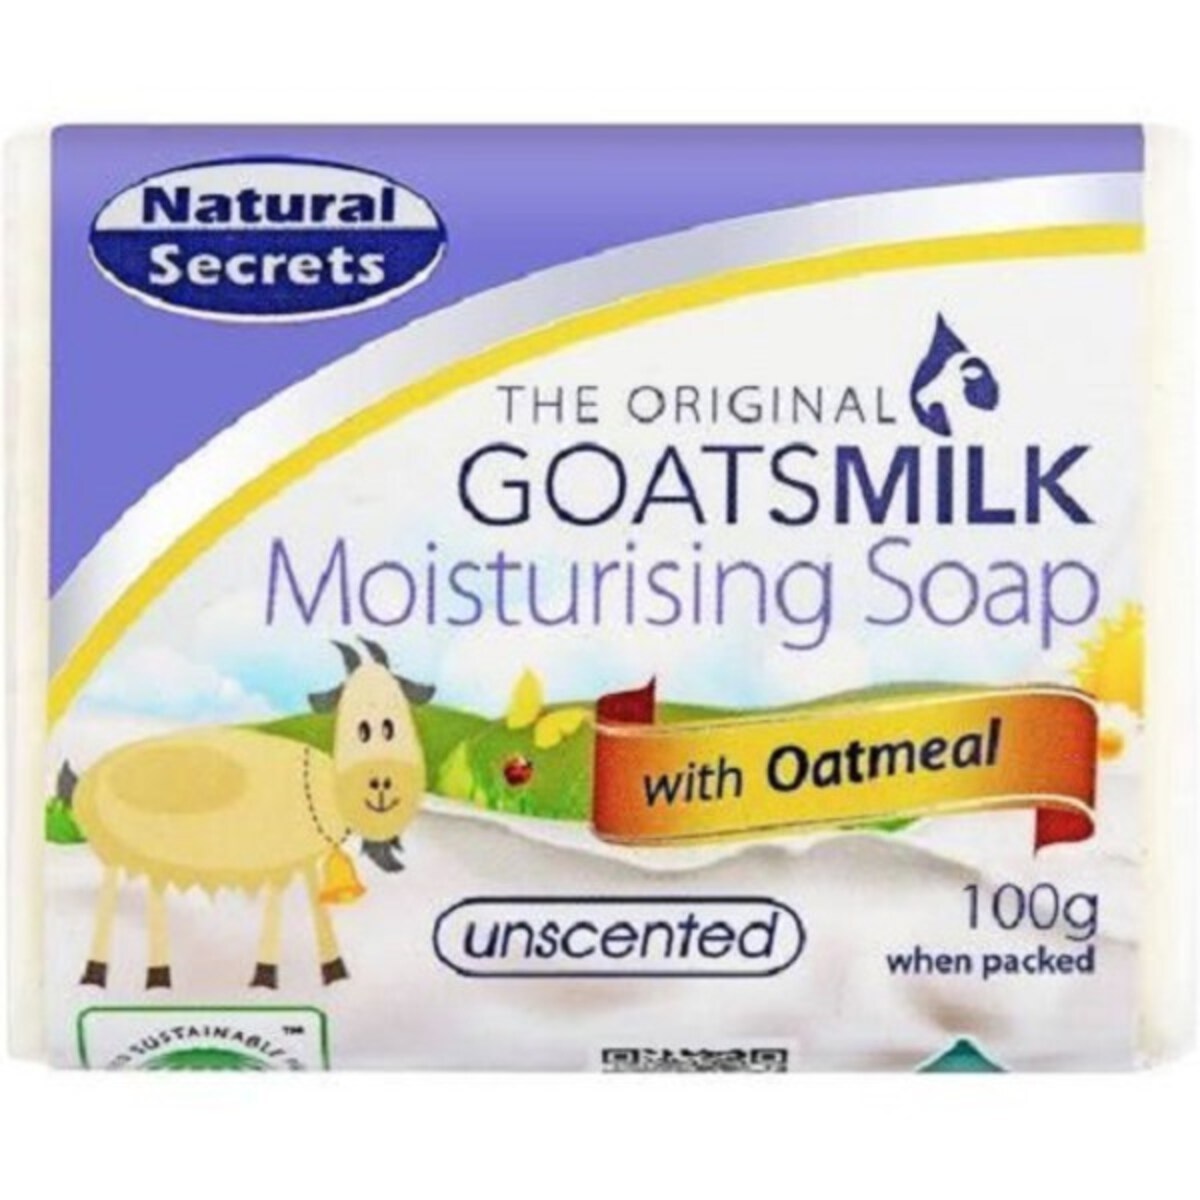 Natural Secrets Goatsmilk Soap with Oatmeal 100g